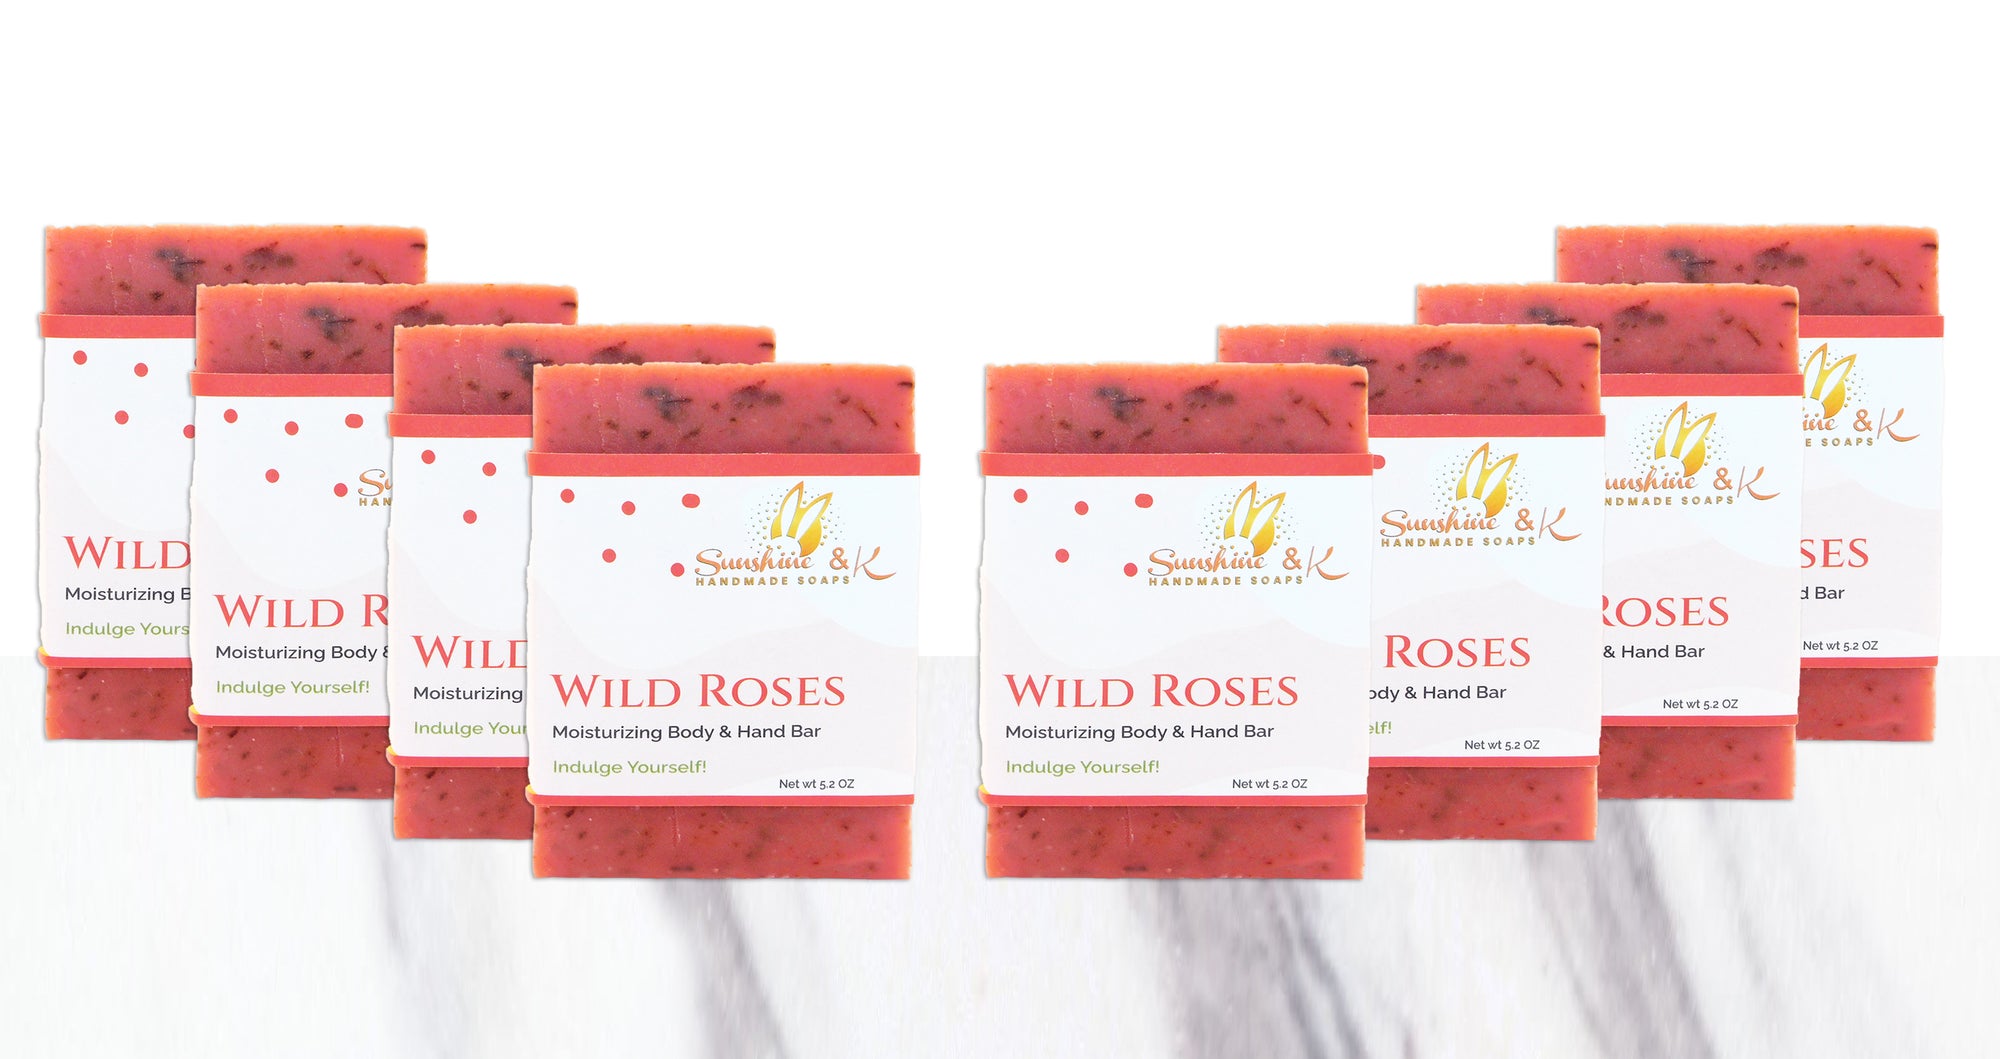 Wild roses Soap Bar - Body & Face Bar Soap, Handmade Bath Soap, Moisturizing Bar Soap With Beeswax, Rice Bran Oil, & Natural Base Oils, Natural Soap Bars, 5 oz, Sunshine & K Handmade Soaps